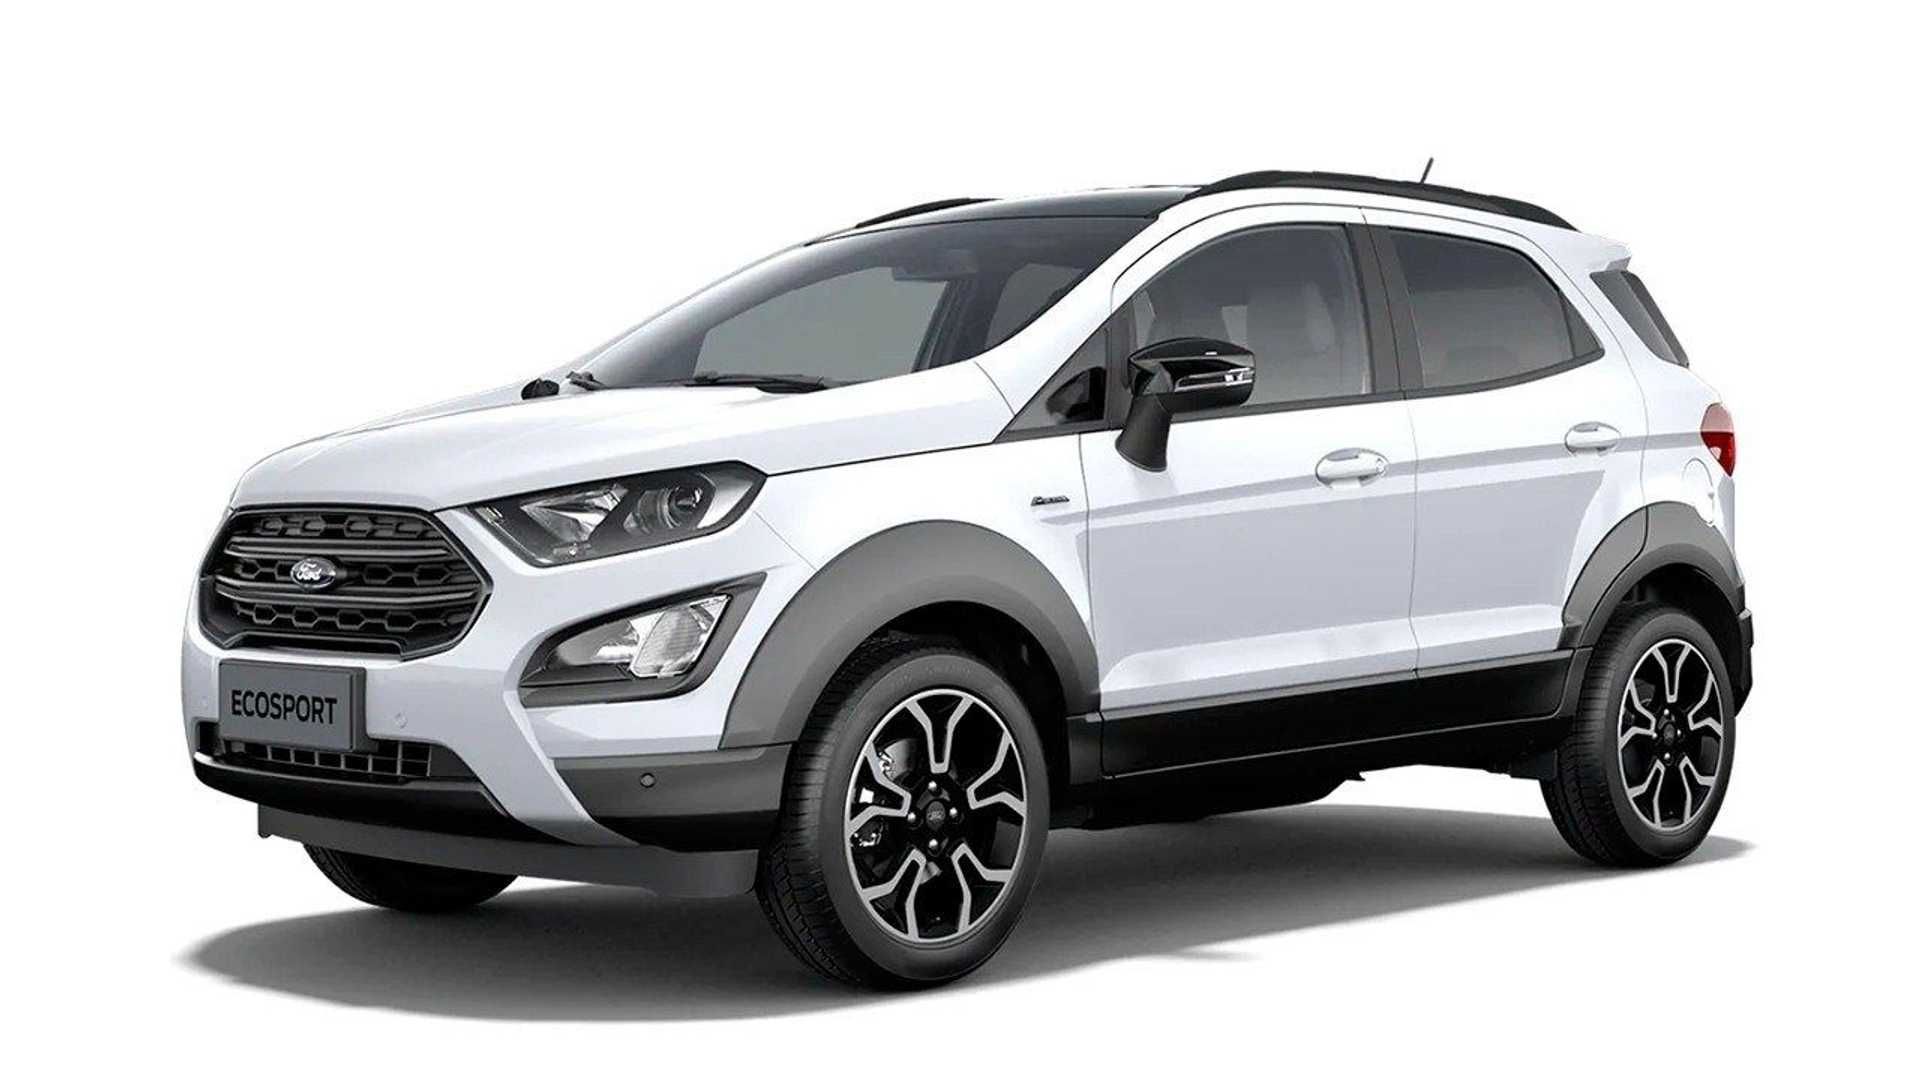 Ford Ecosport image